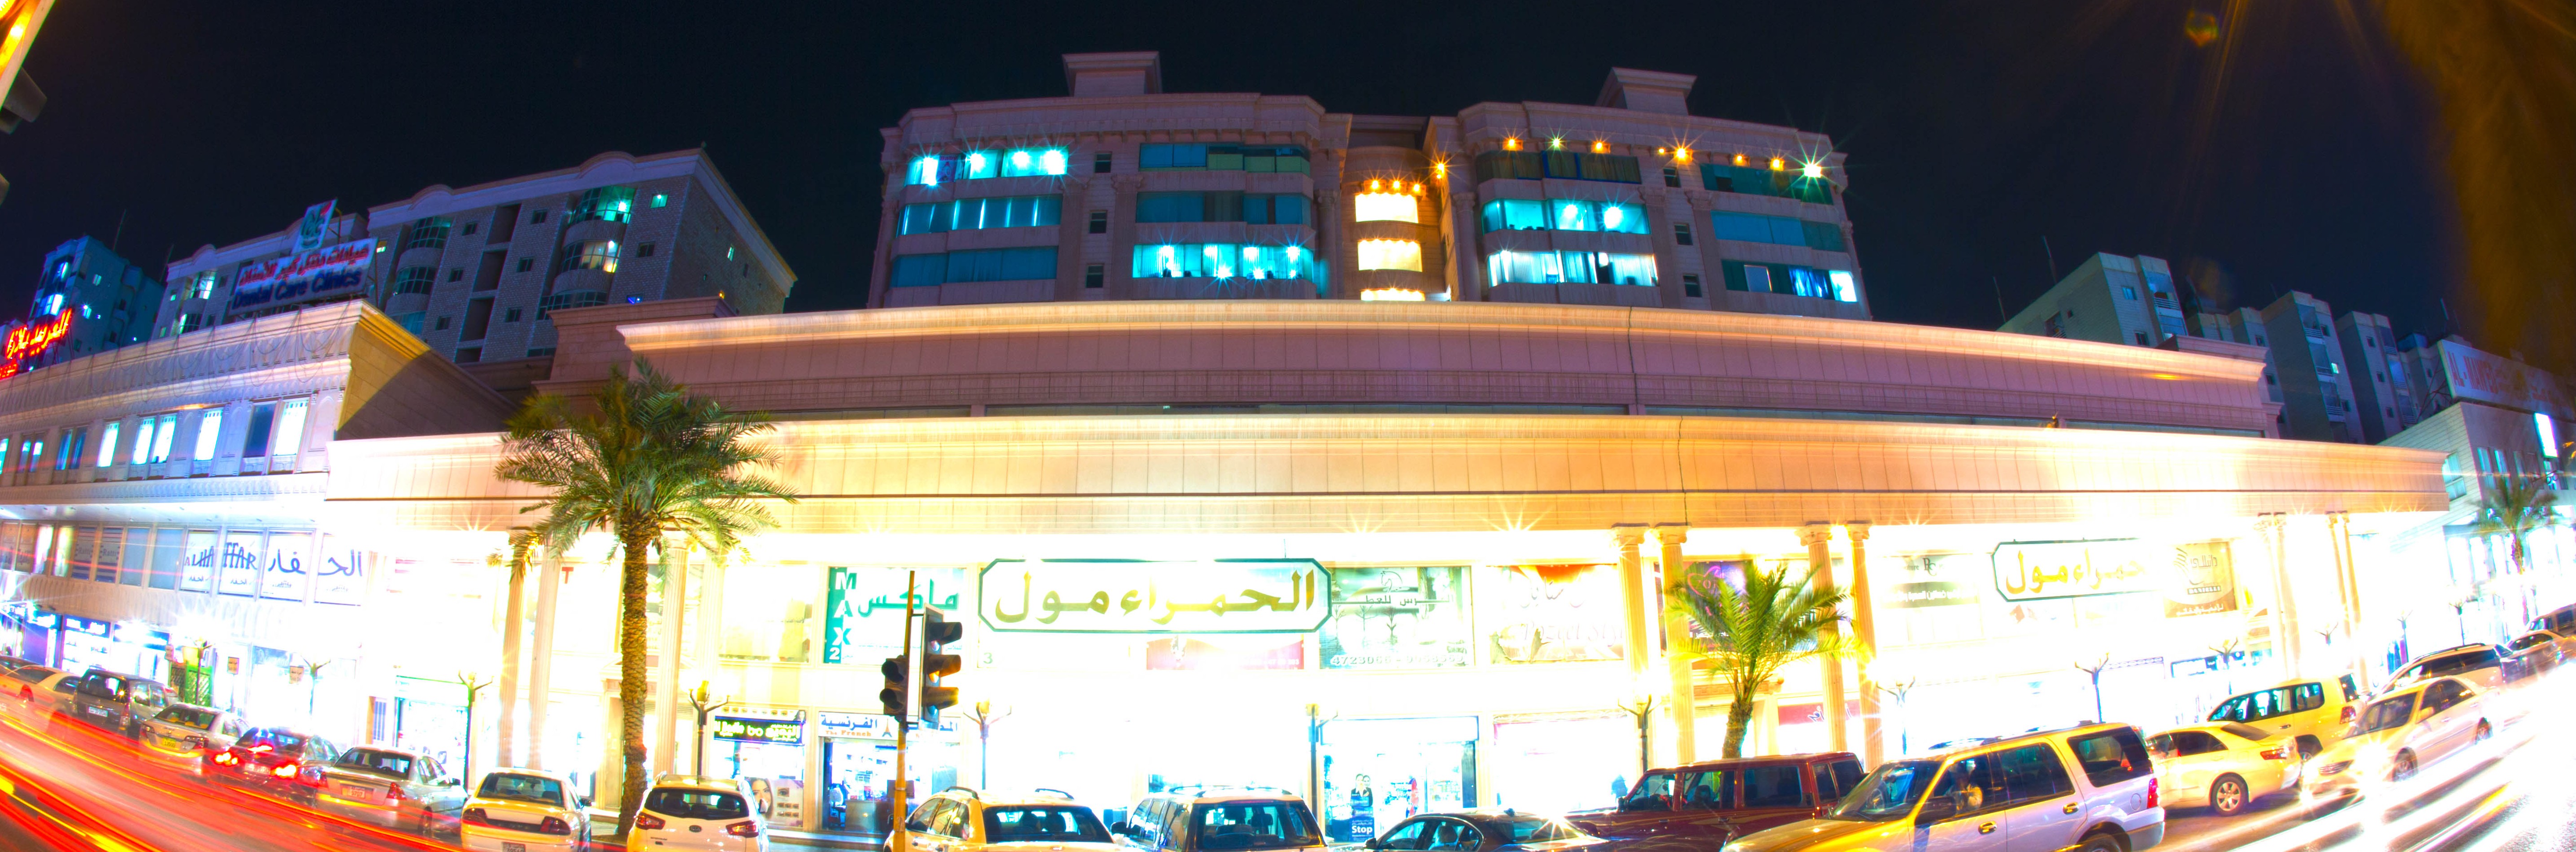 Al-Hamra Mall